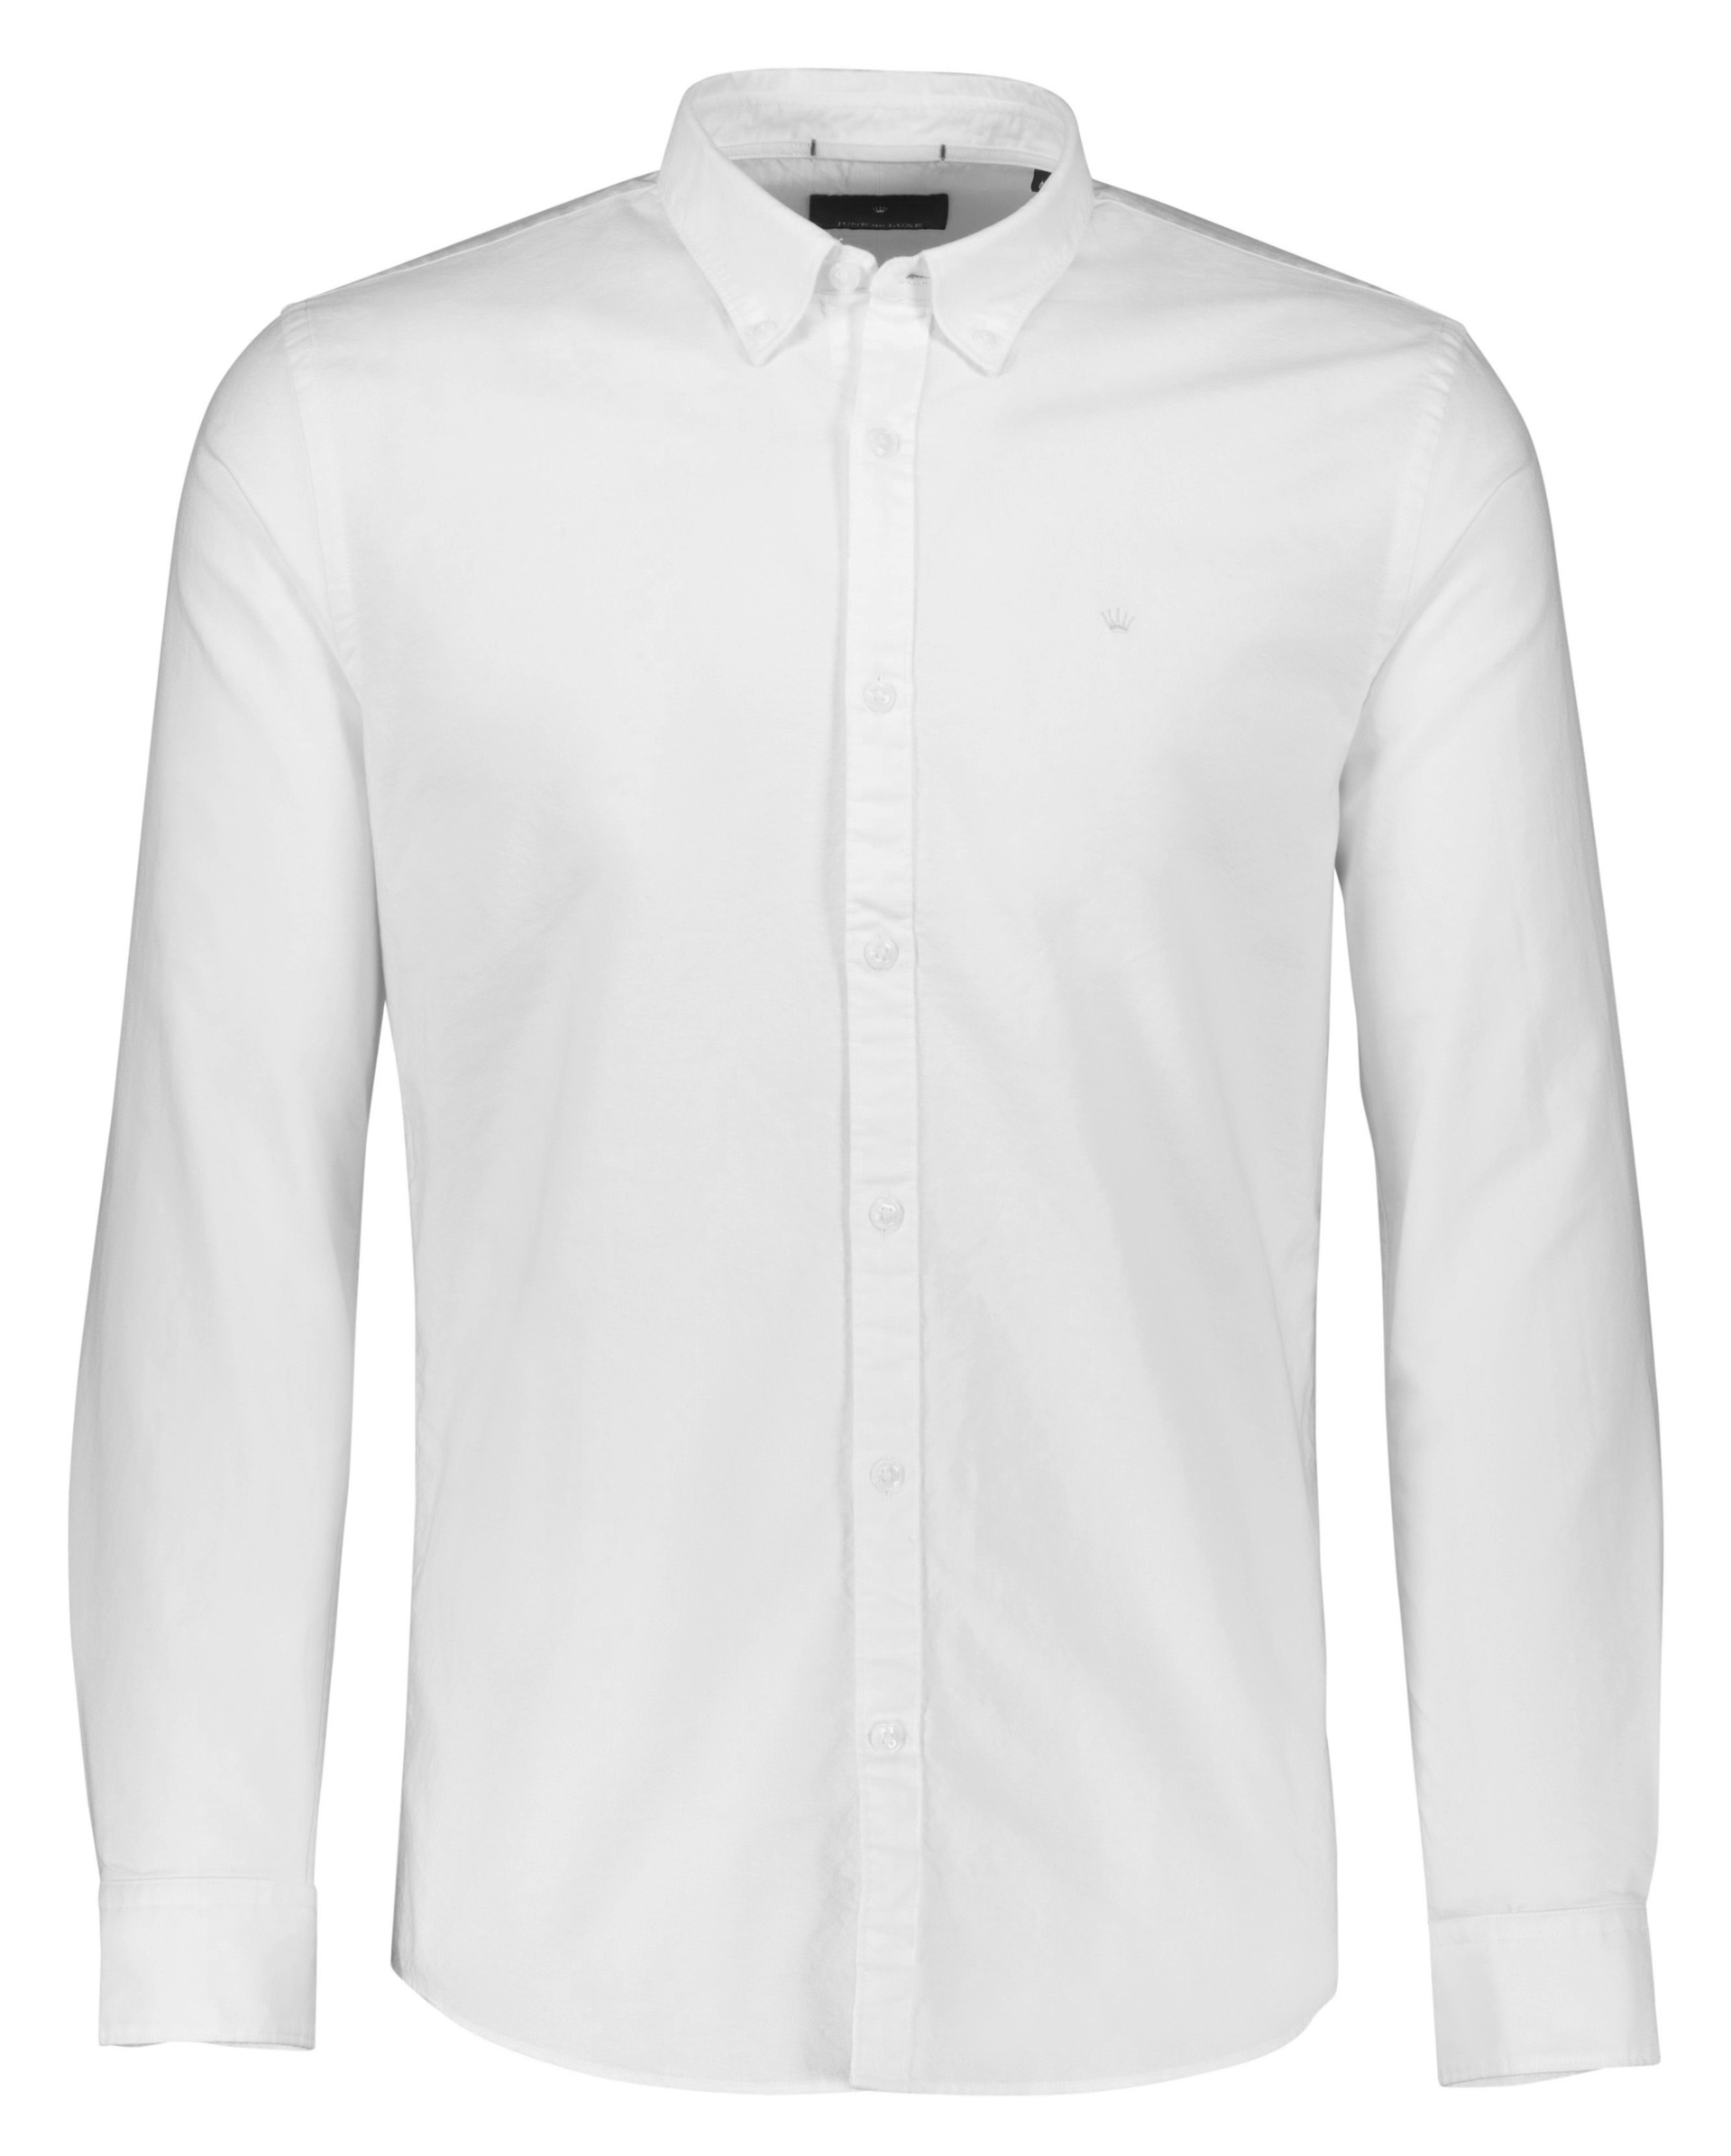 Junk de Luxe Oxford shirt white / white